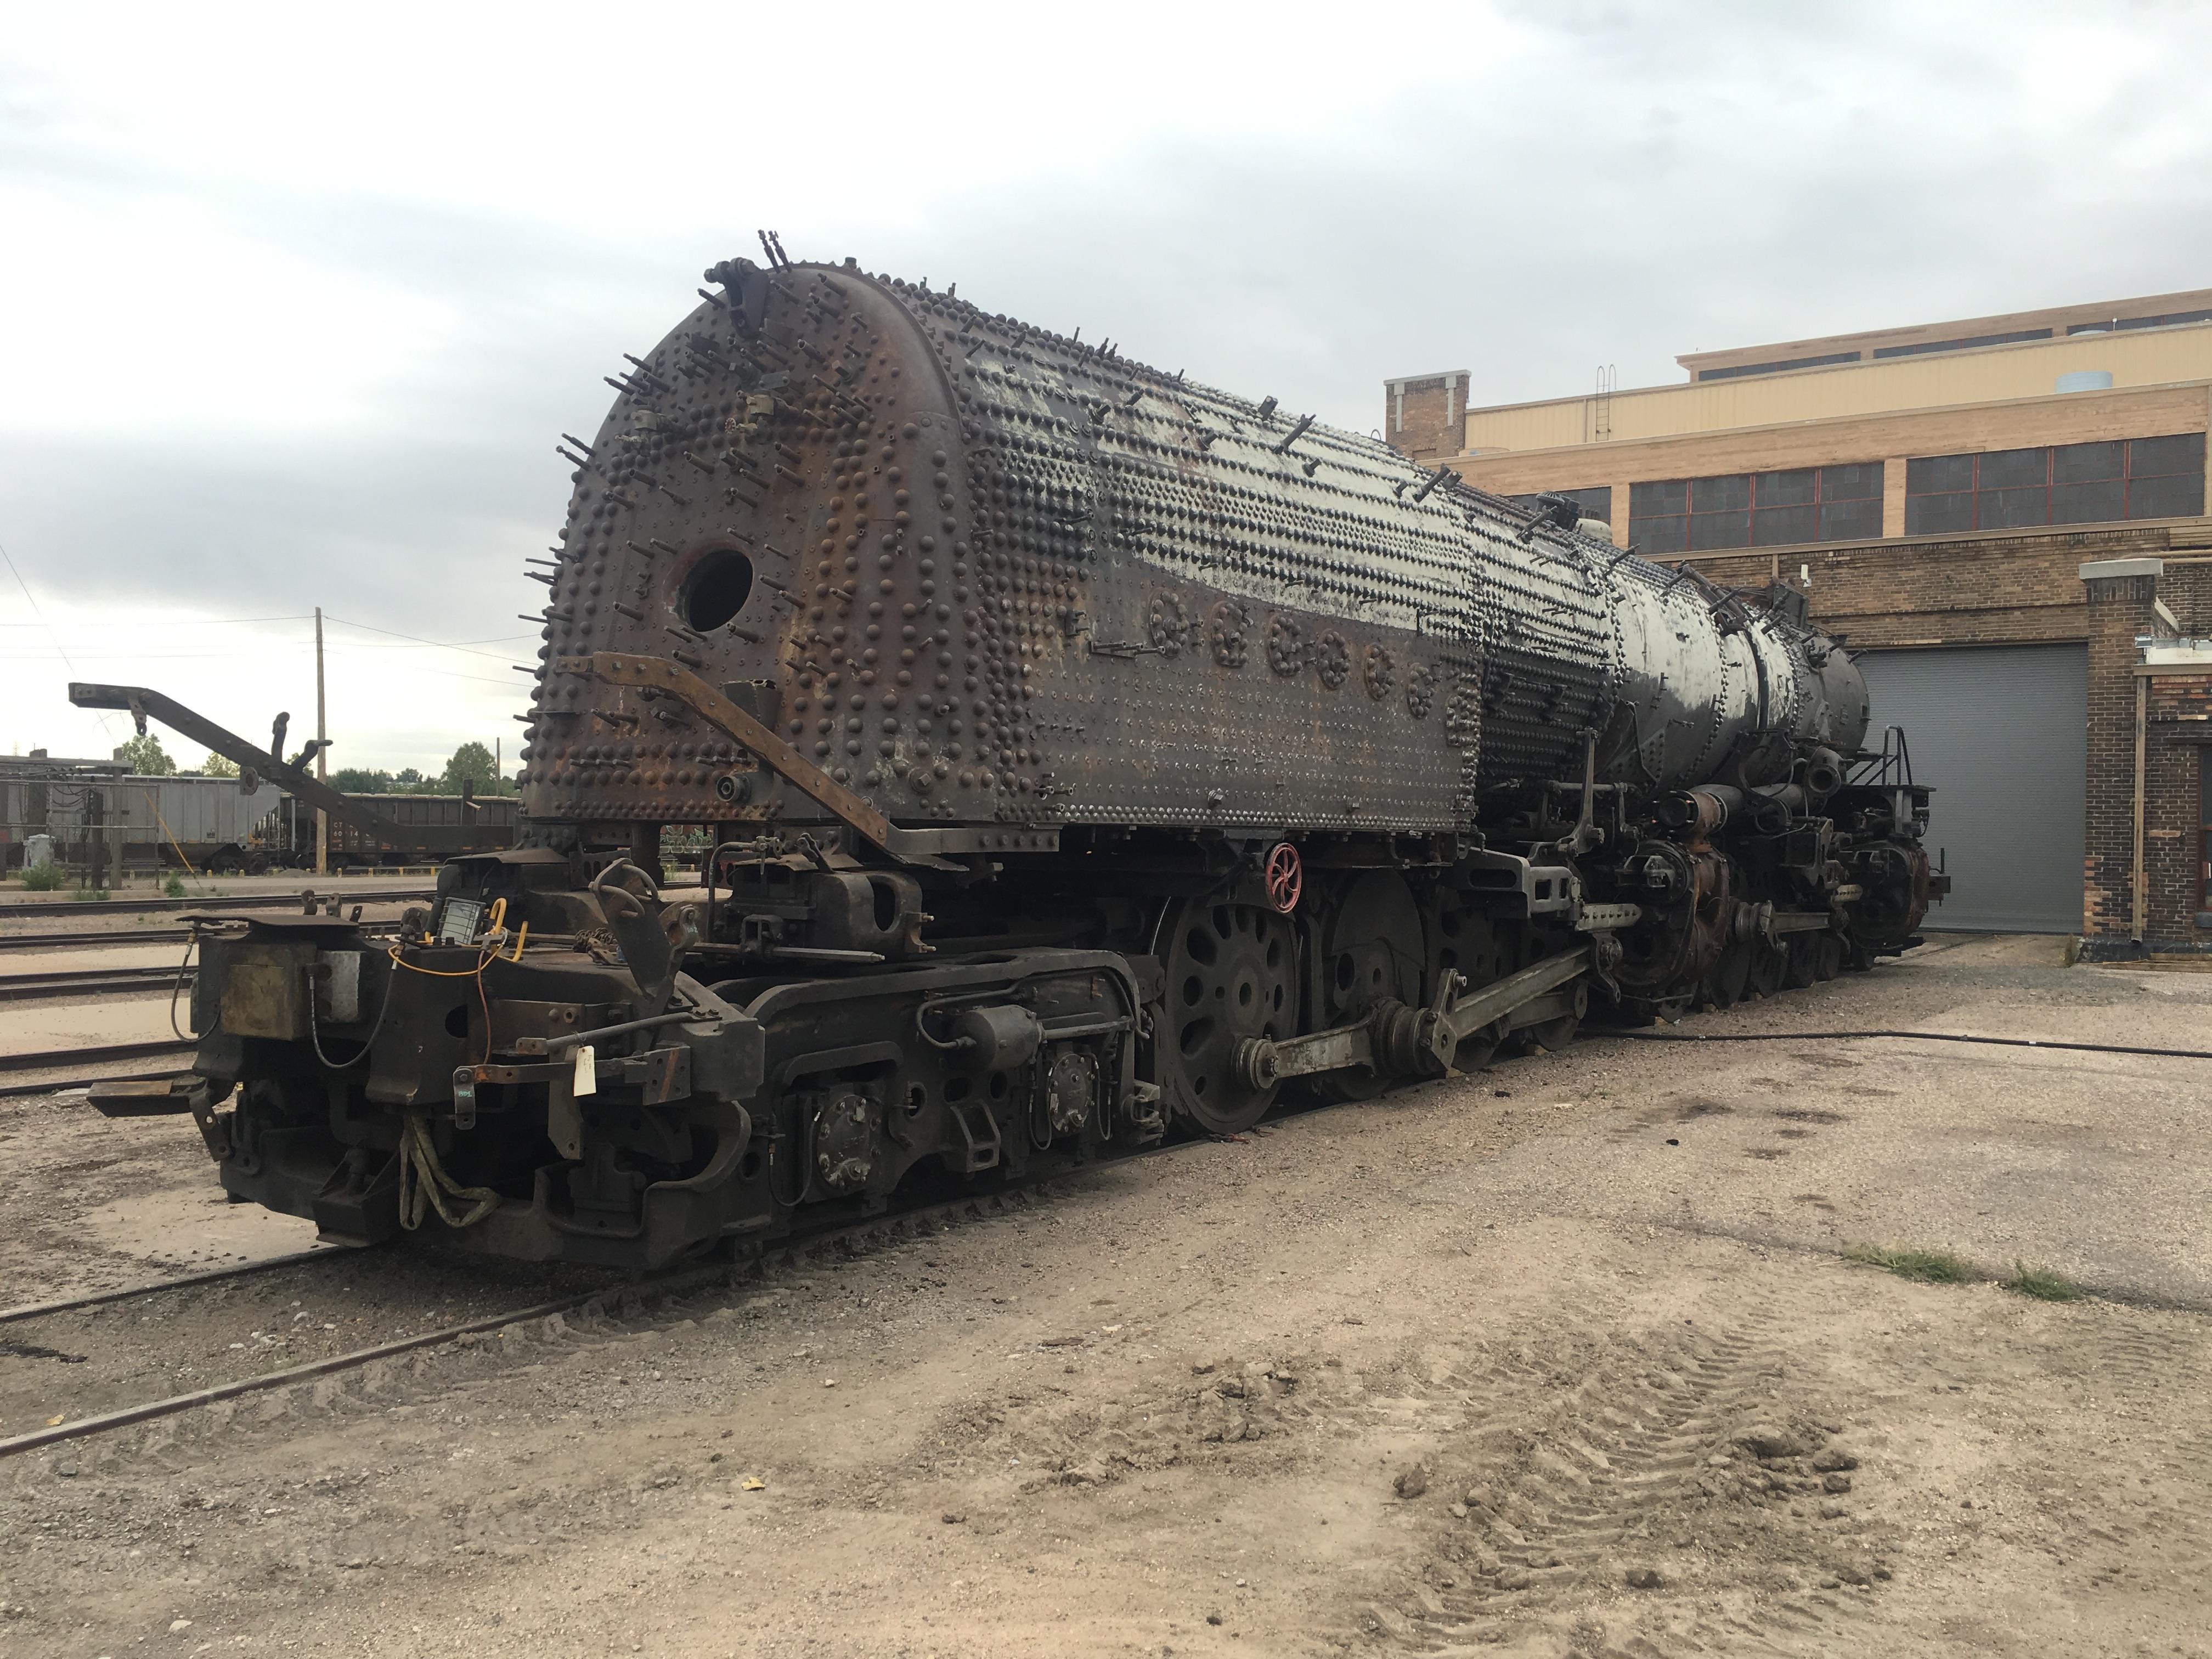 Stripped down  Big Boy, locomotive No. 4014.